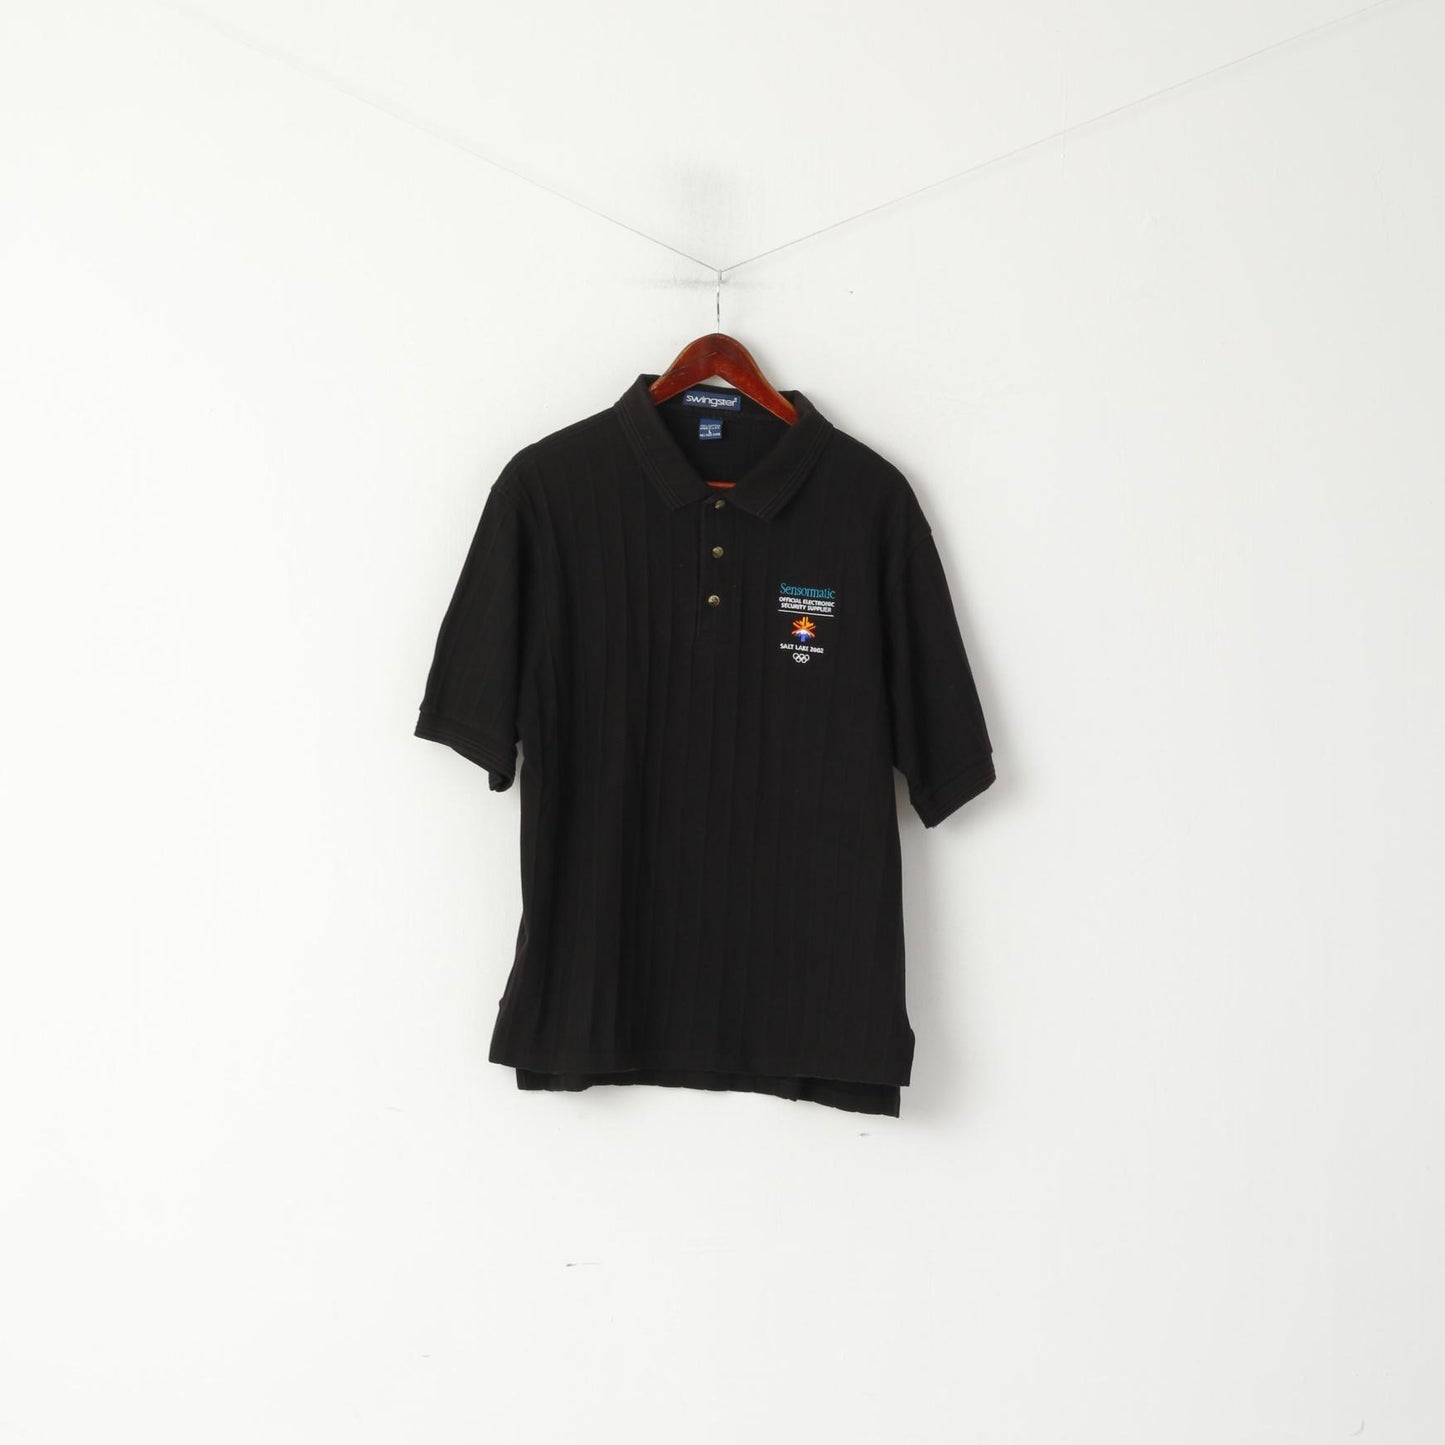 Swingster Men L Polo Shirt Black Cotton Salt Lake City 2002 Olympic Short Sleeve Top